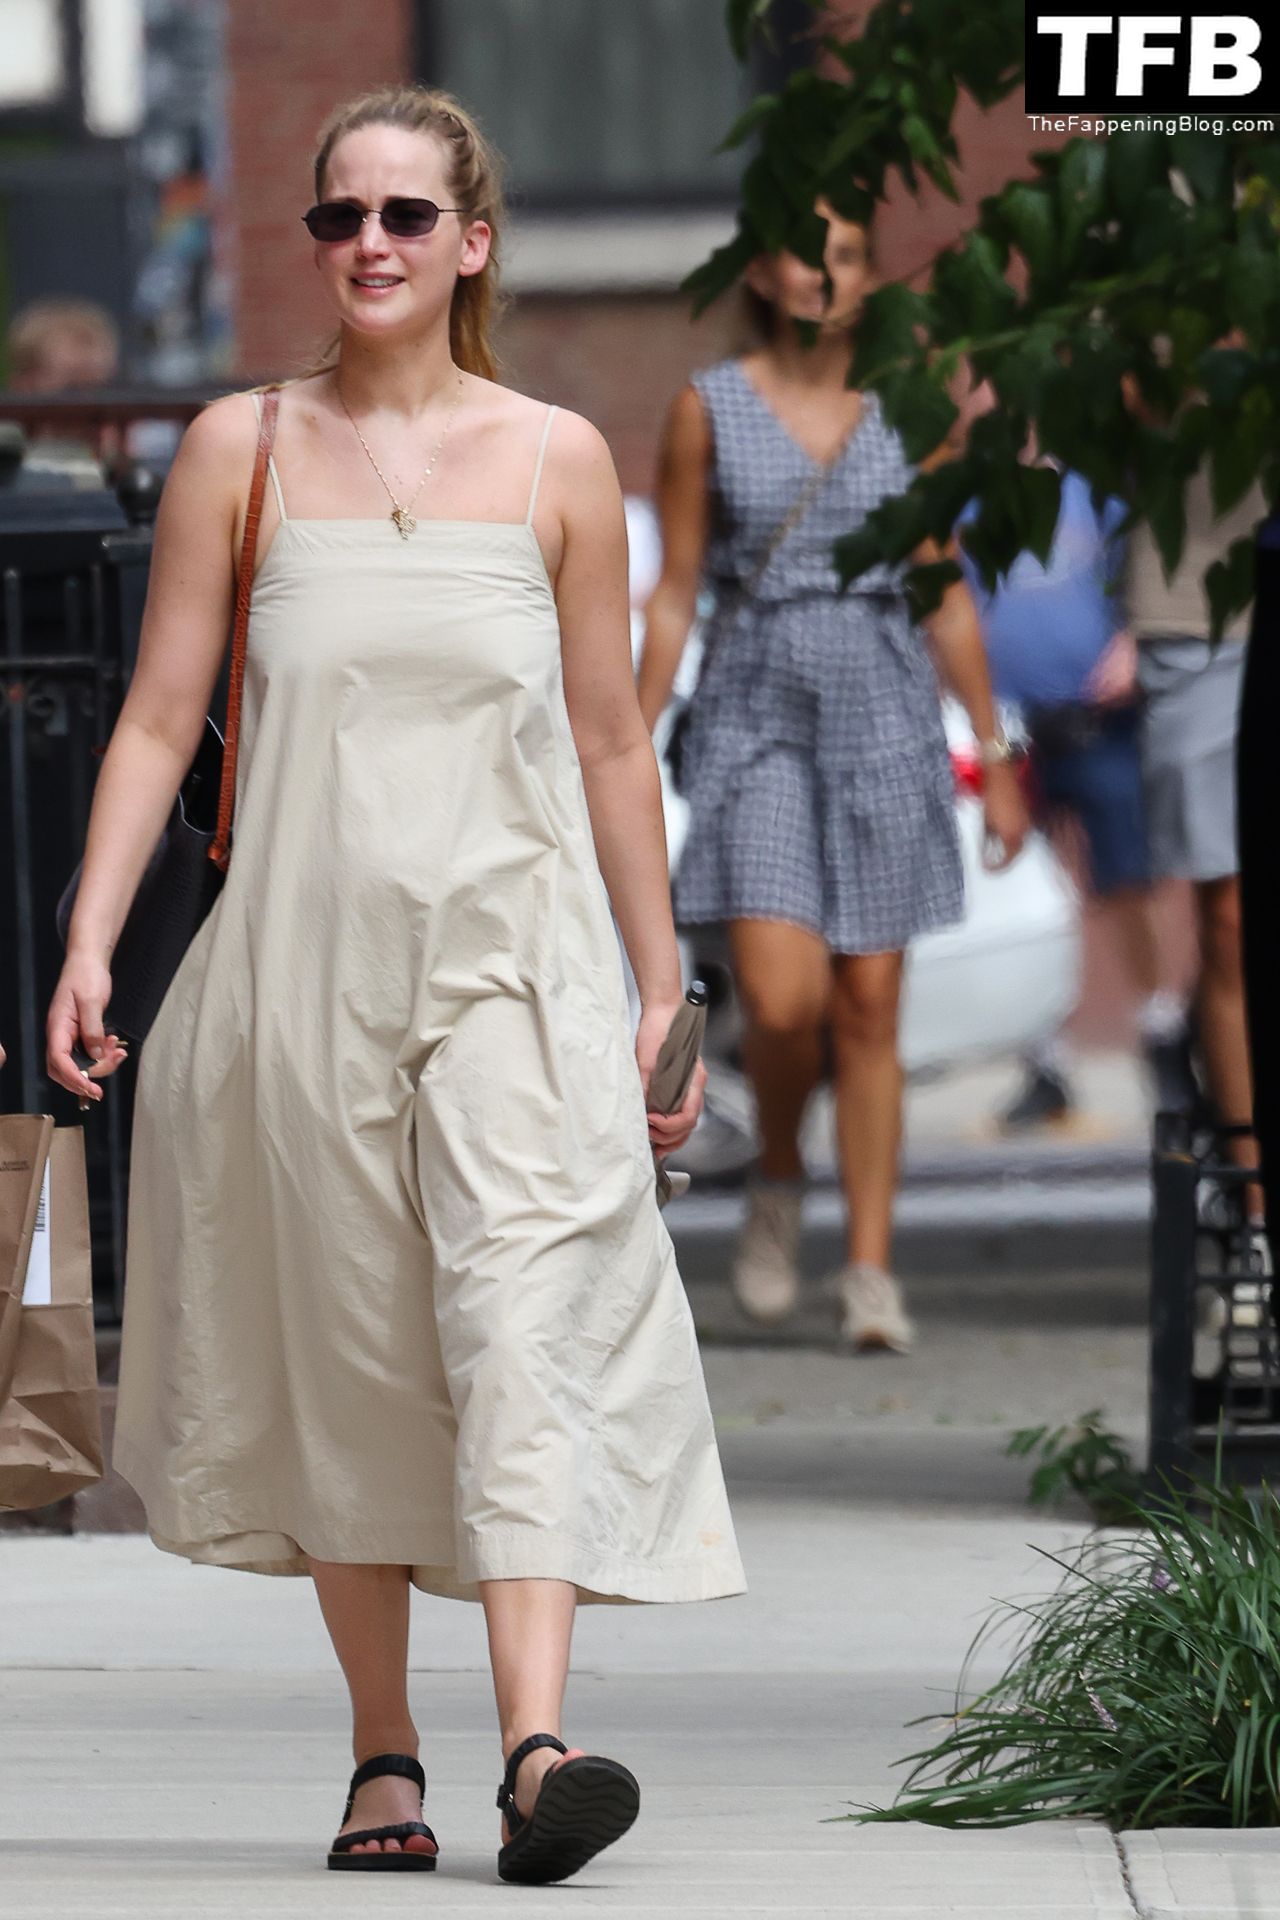 Jennifer-Lawrence-Sexy-Feet-The-Fappening-Blog-46.jpg